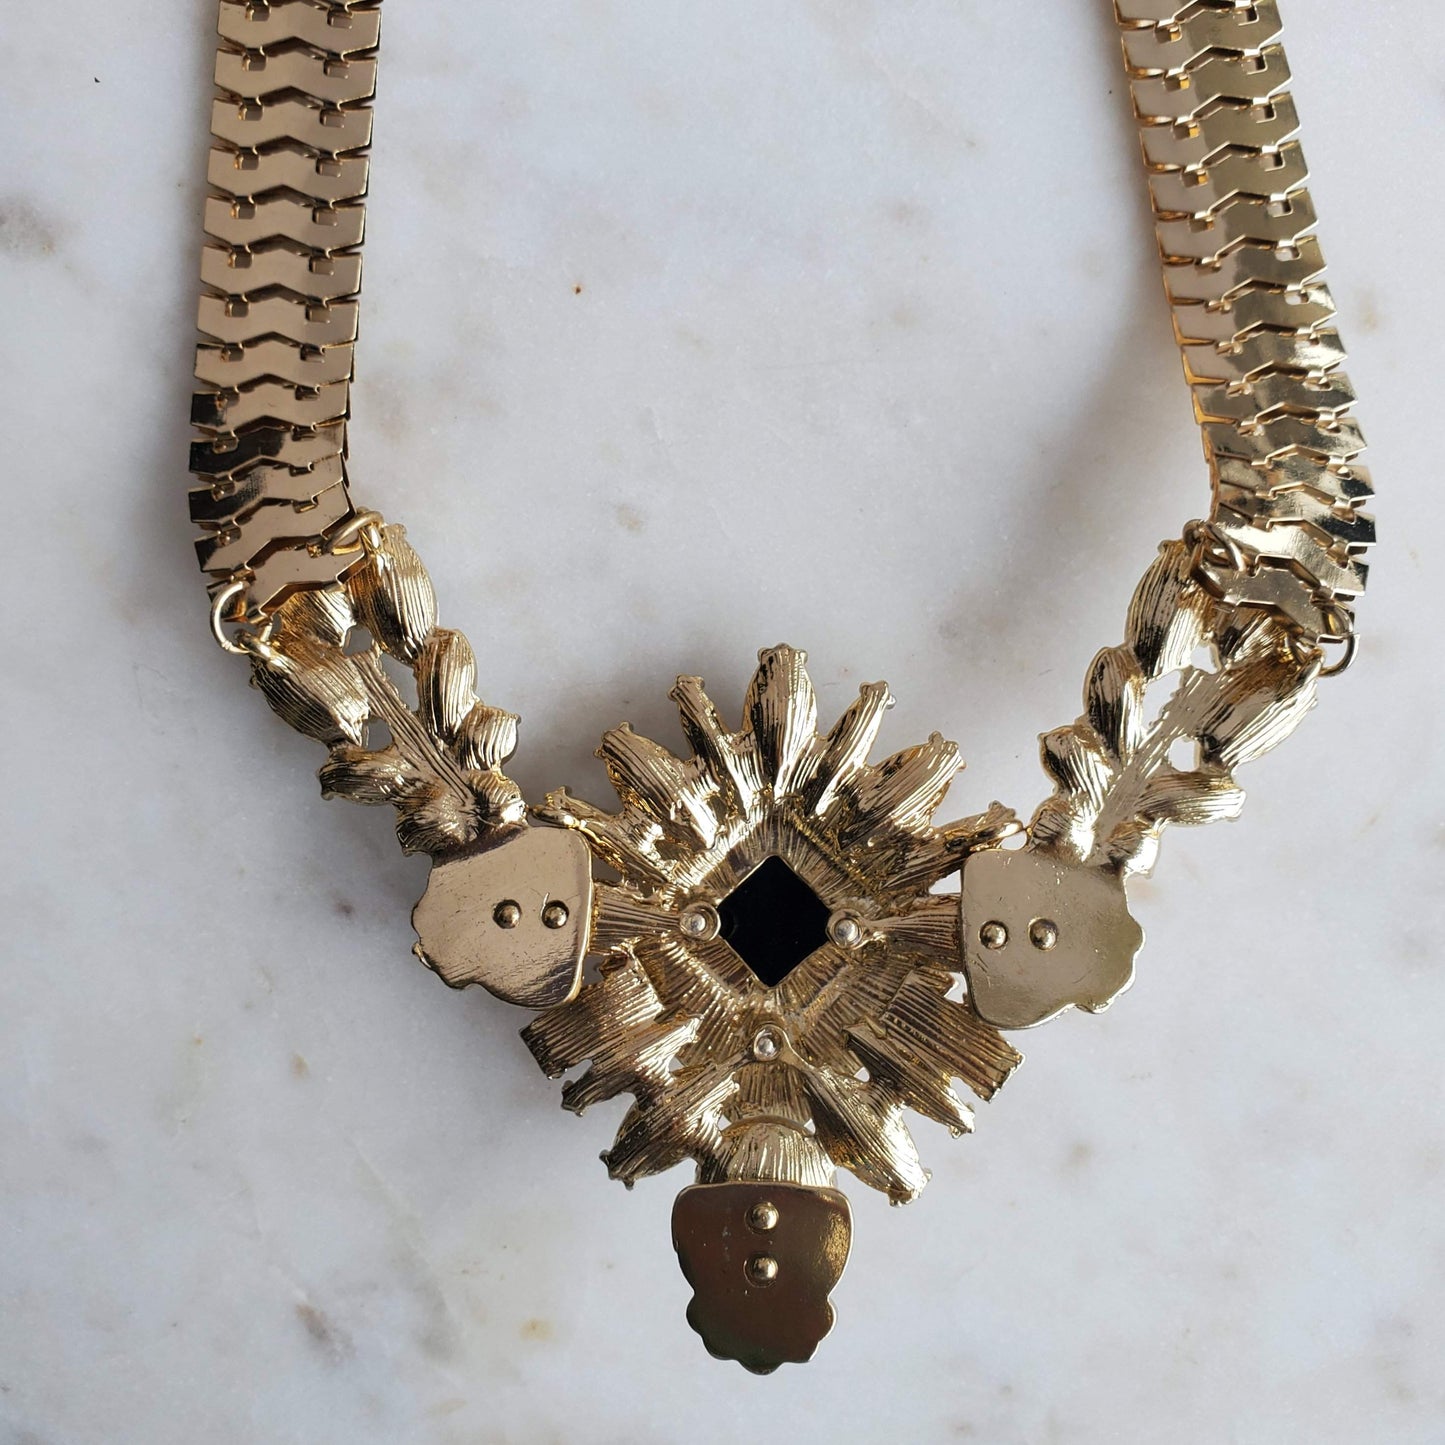 La Bella Necklace-Trendi737 Jewelry Boutique-acrylic necklace,La Bella Necklace,Necklace,pink,rhinestone necklace,statement necklace